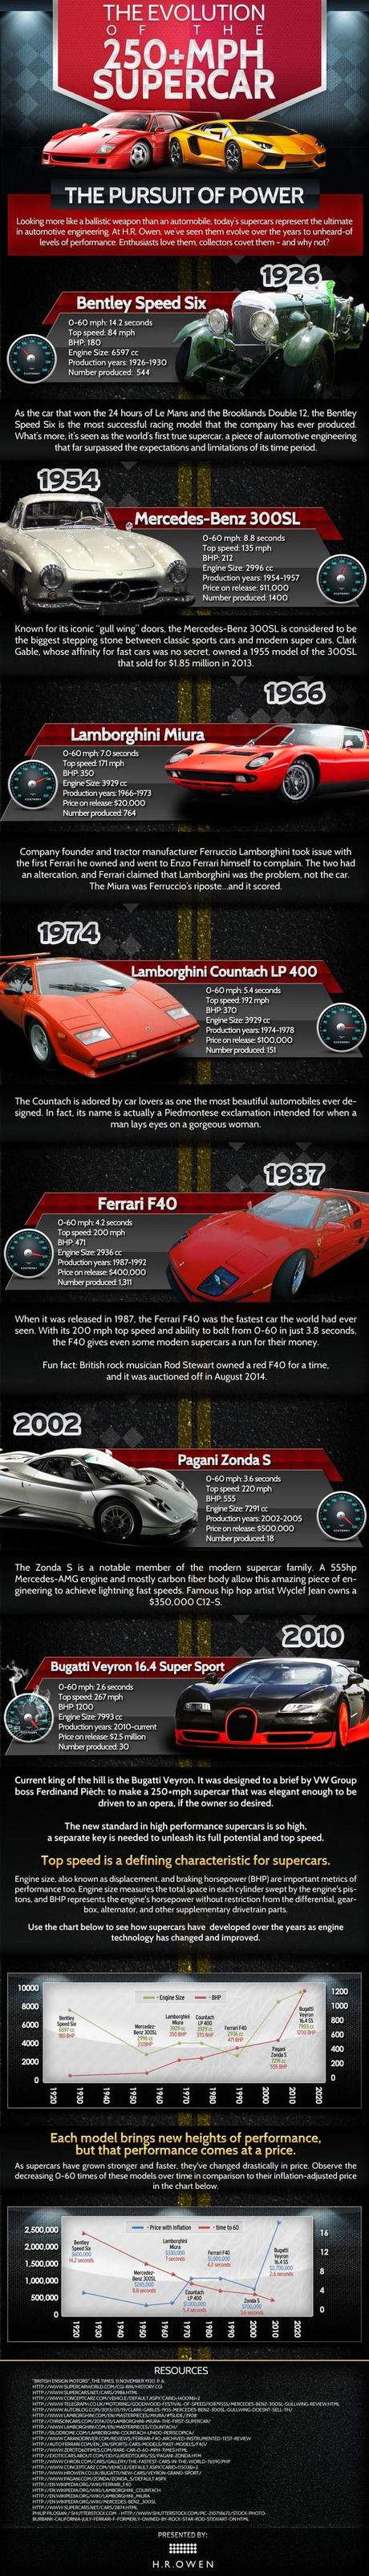 supercar-evolution-infographic